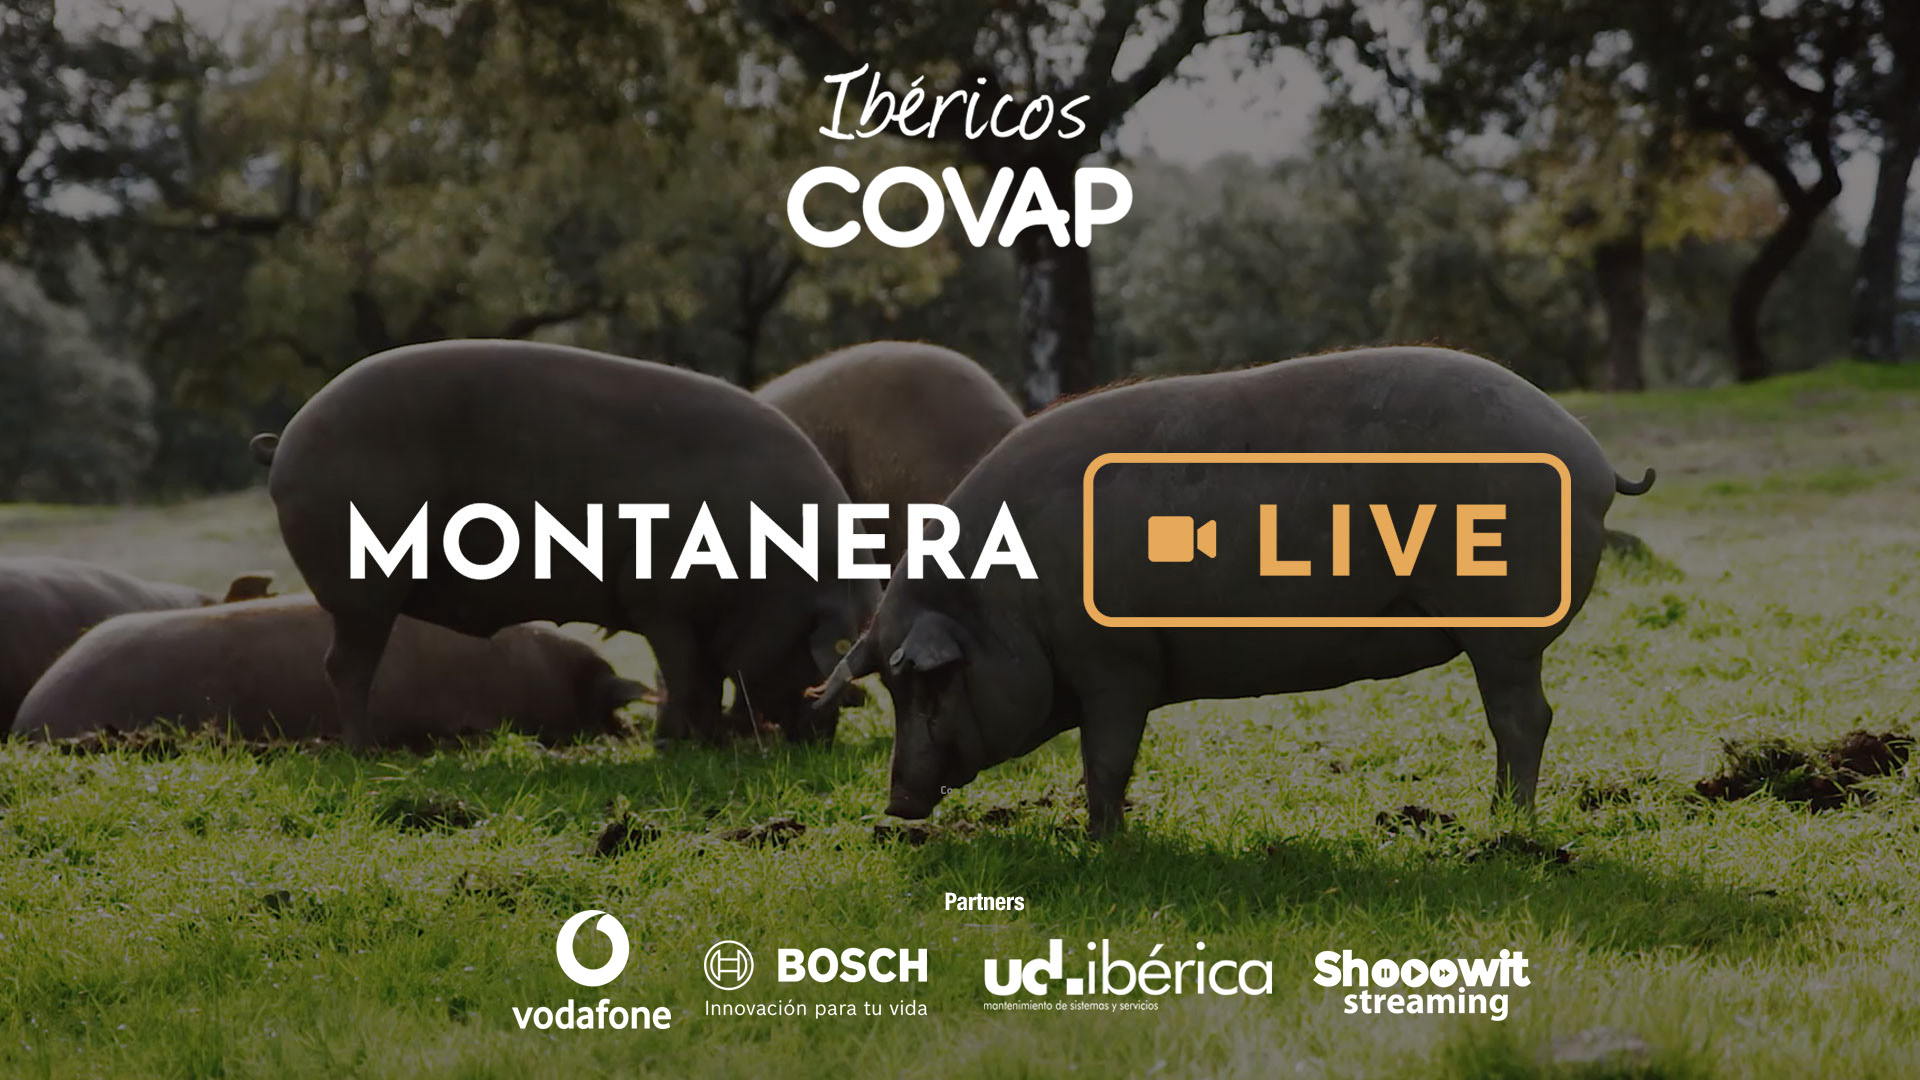 Montanera Live | Ibéricos COVAP